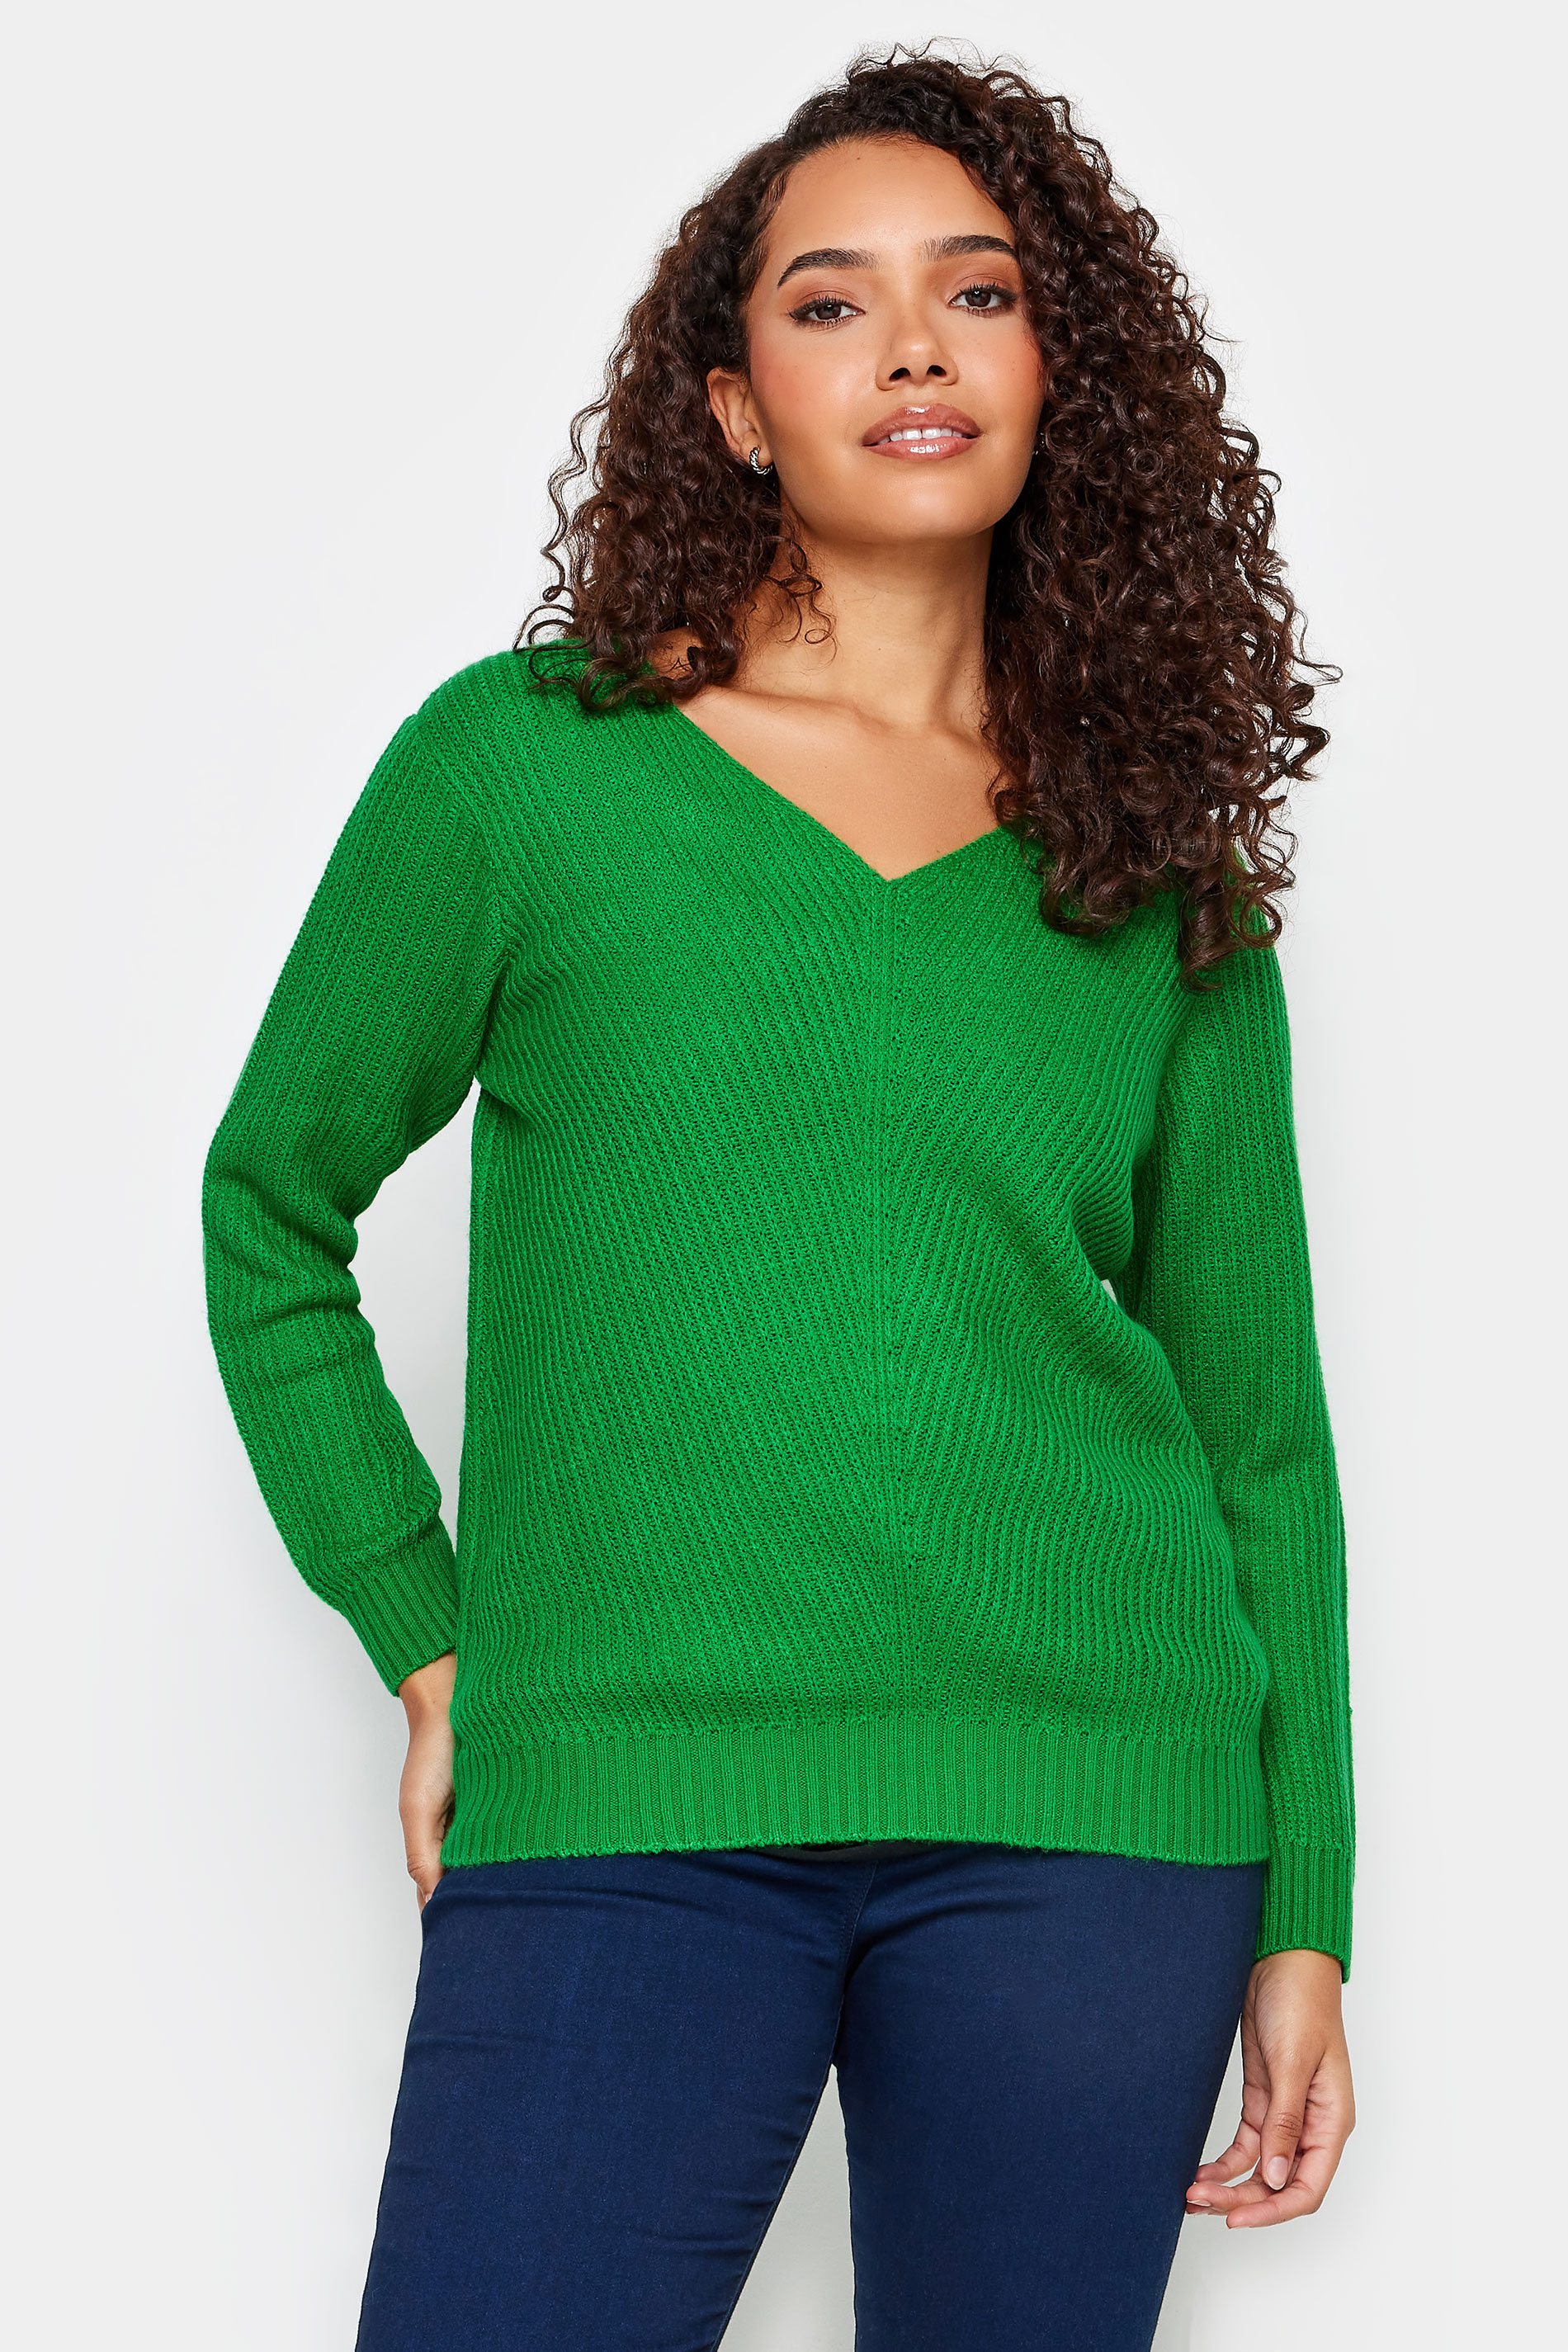 M&Co Fern Green V-Neck Knitted Jumper | M&Co 1